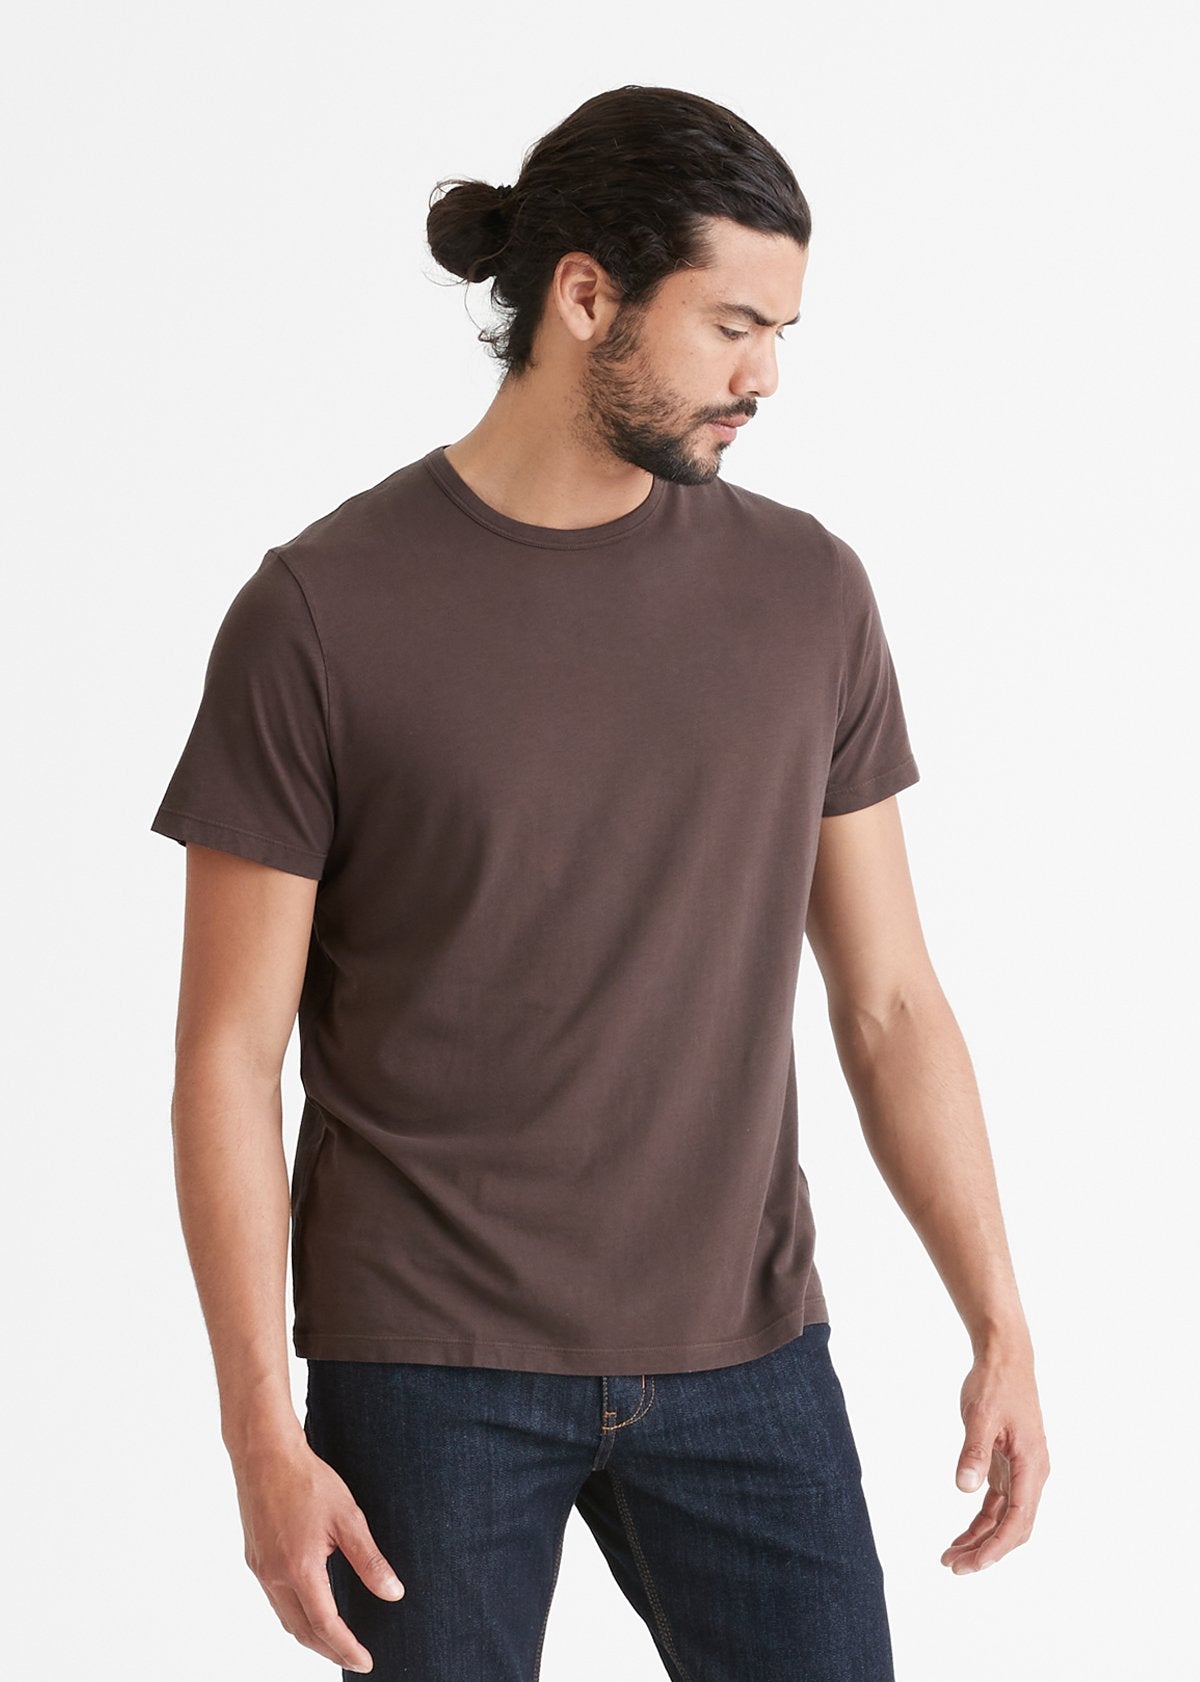 mens taupe soft lightweight t-shirt front